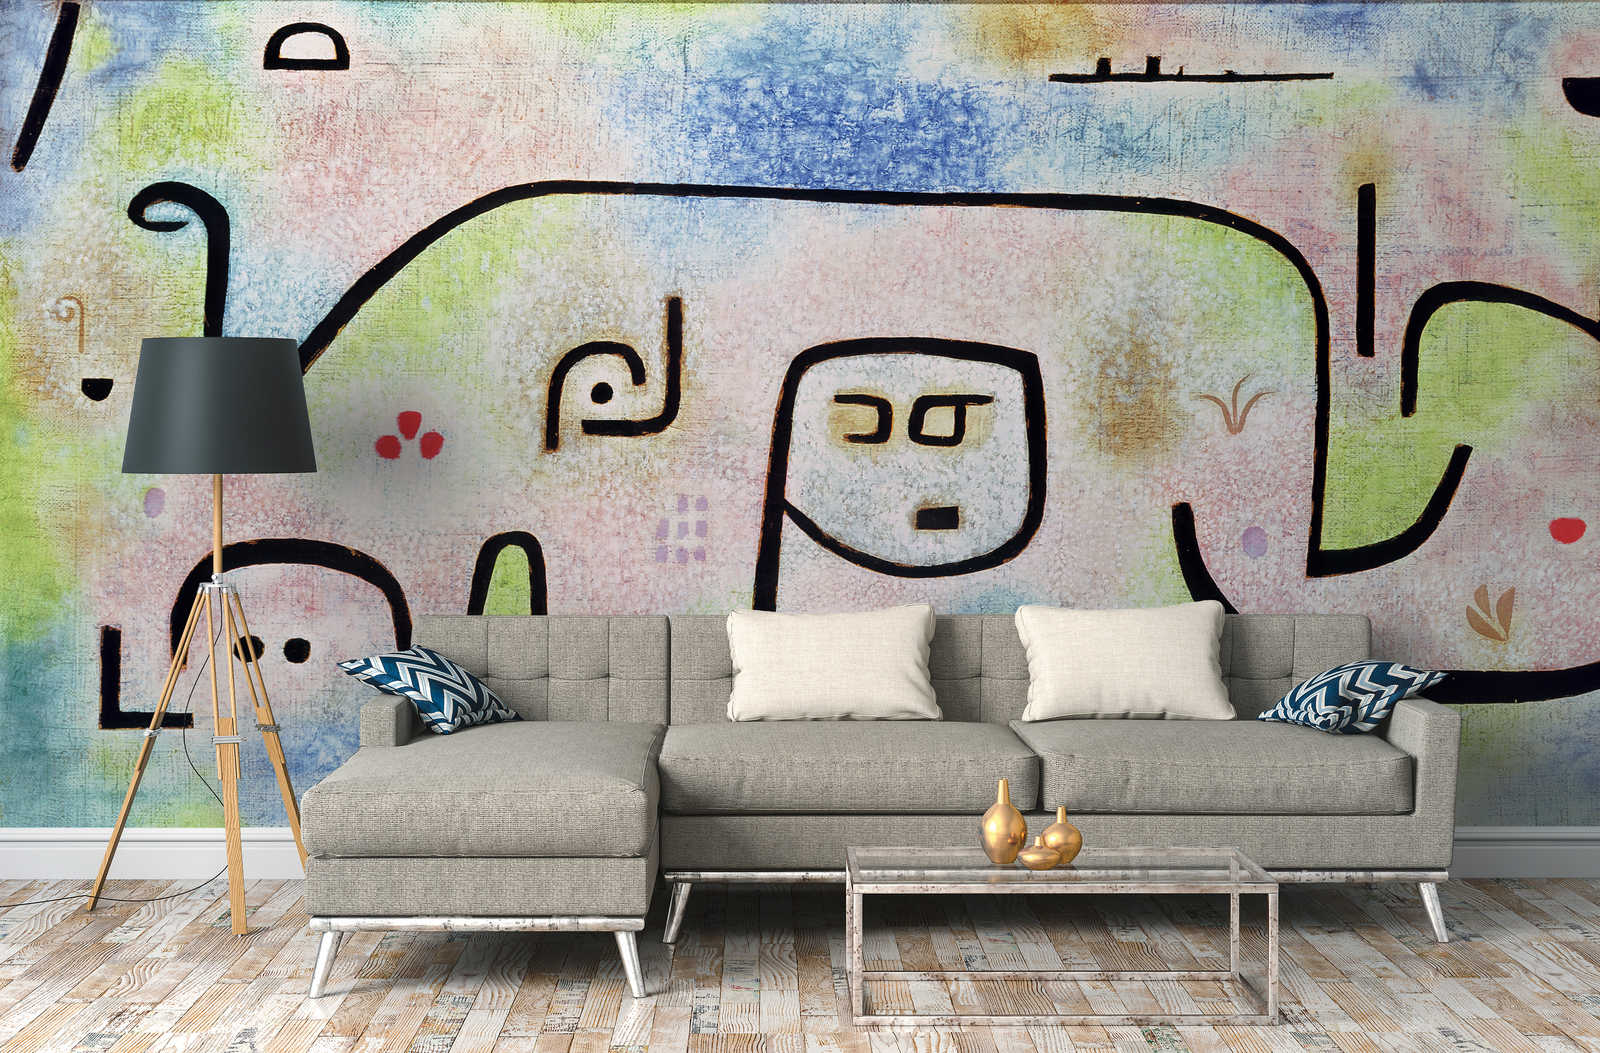             Insula Dulcamara" muurschildering van Paul Klee
        